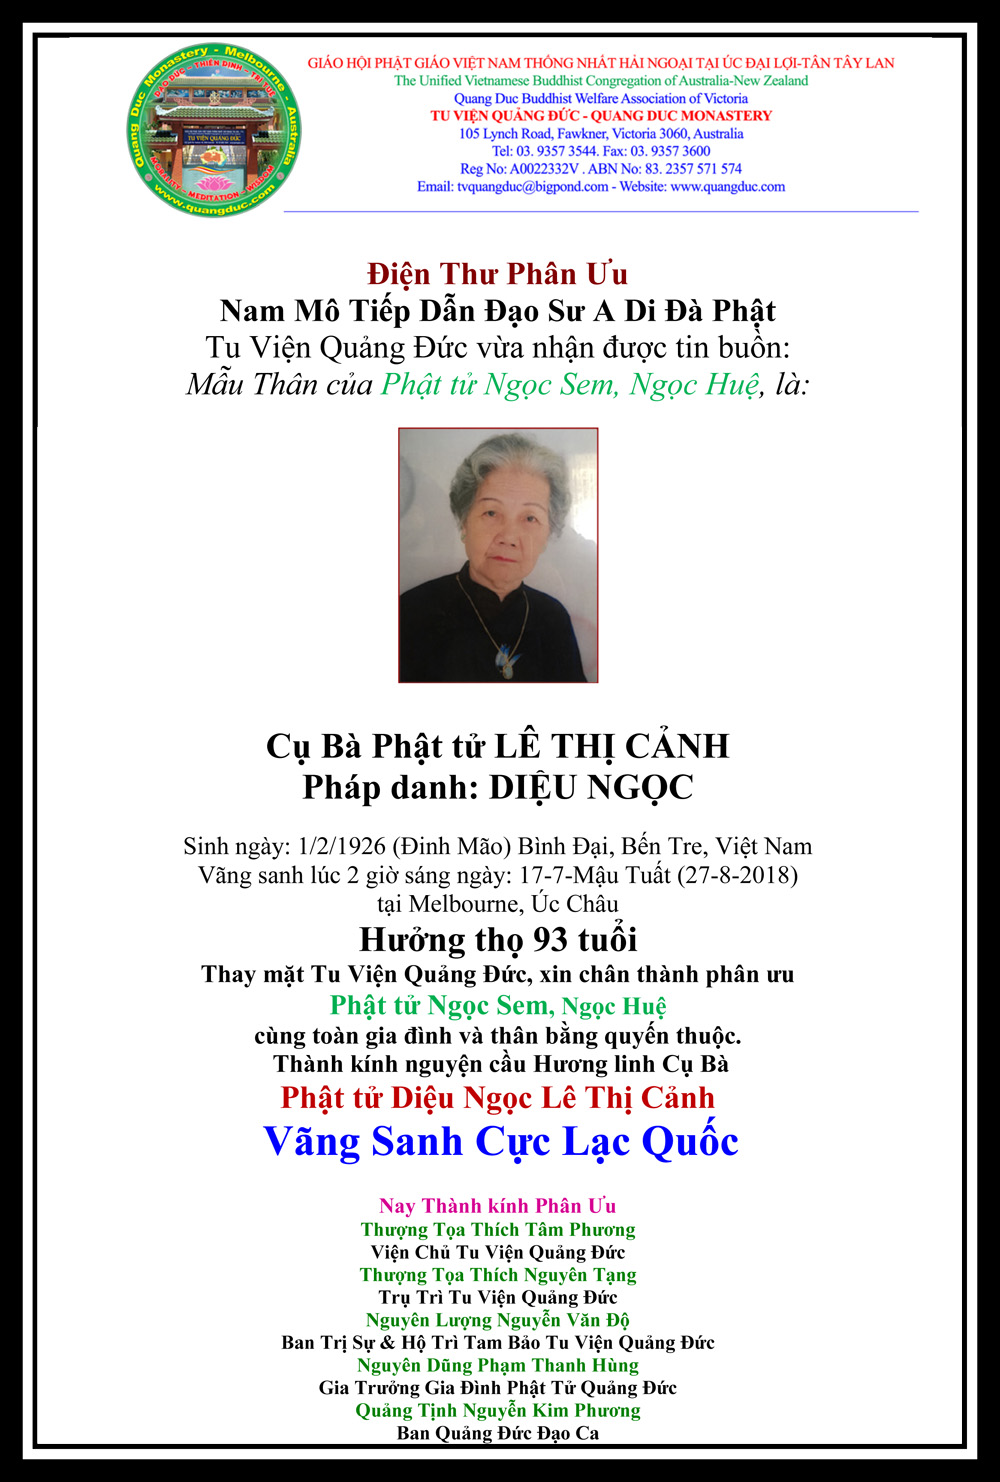 Dien Thu Phan Uu_gia dinh_ Cu ba Le Thi Canh-1926-2018